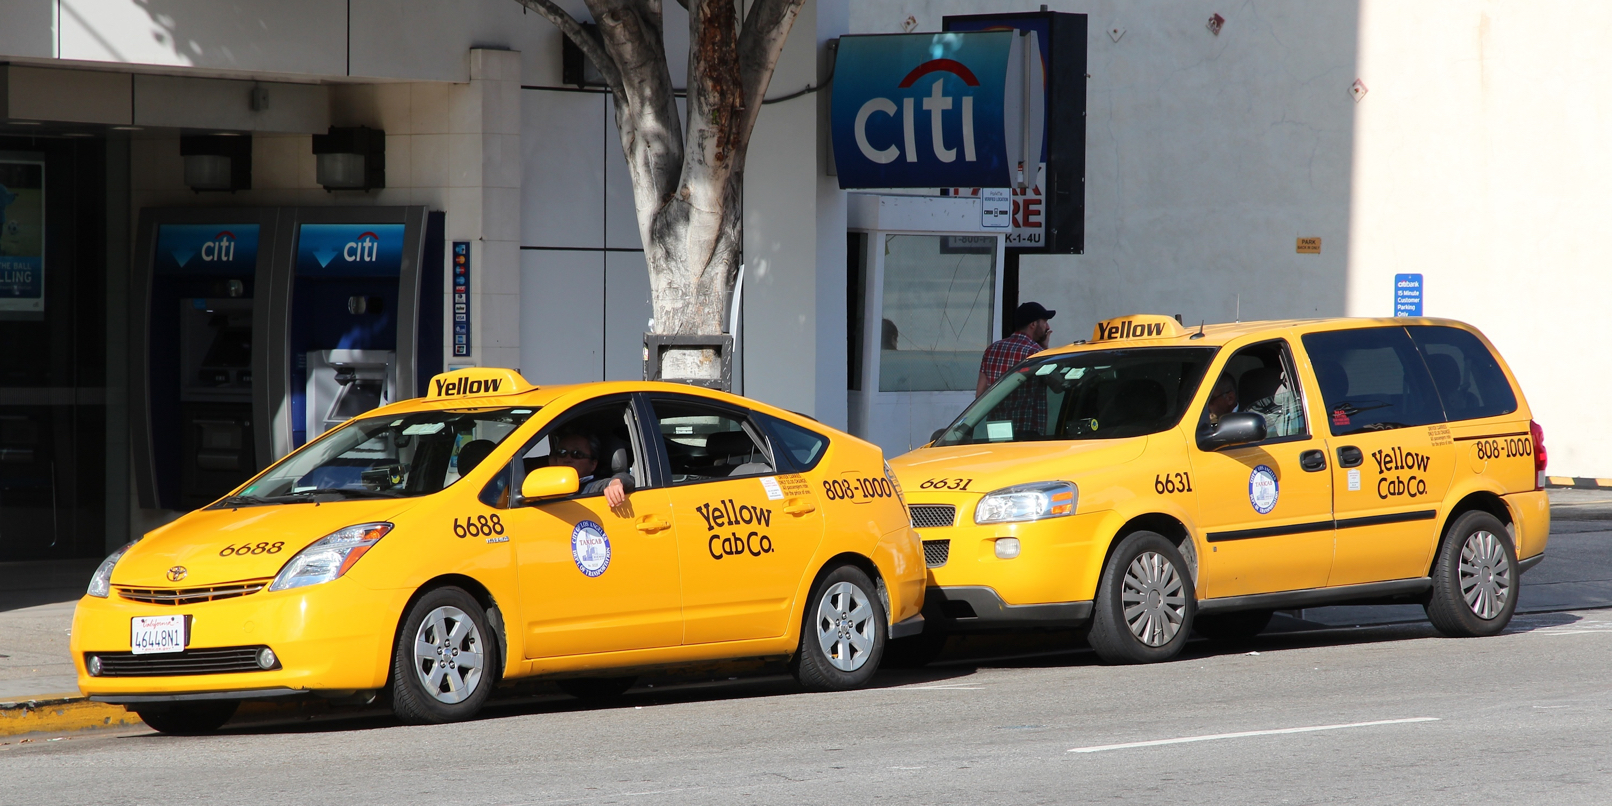 California da luz verde a los taxis robotizados sin conductor